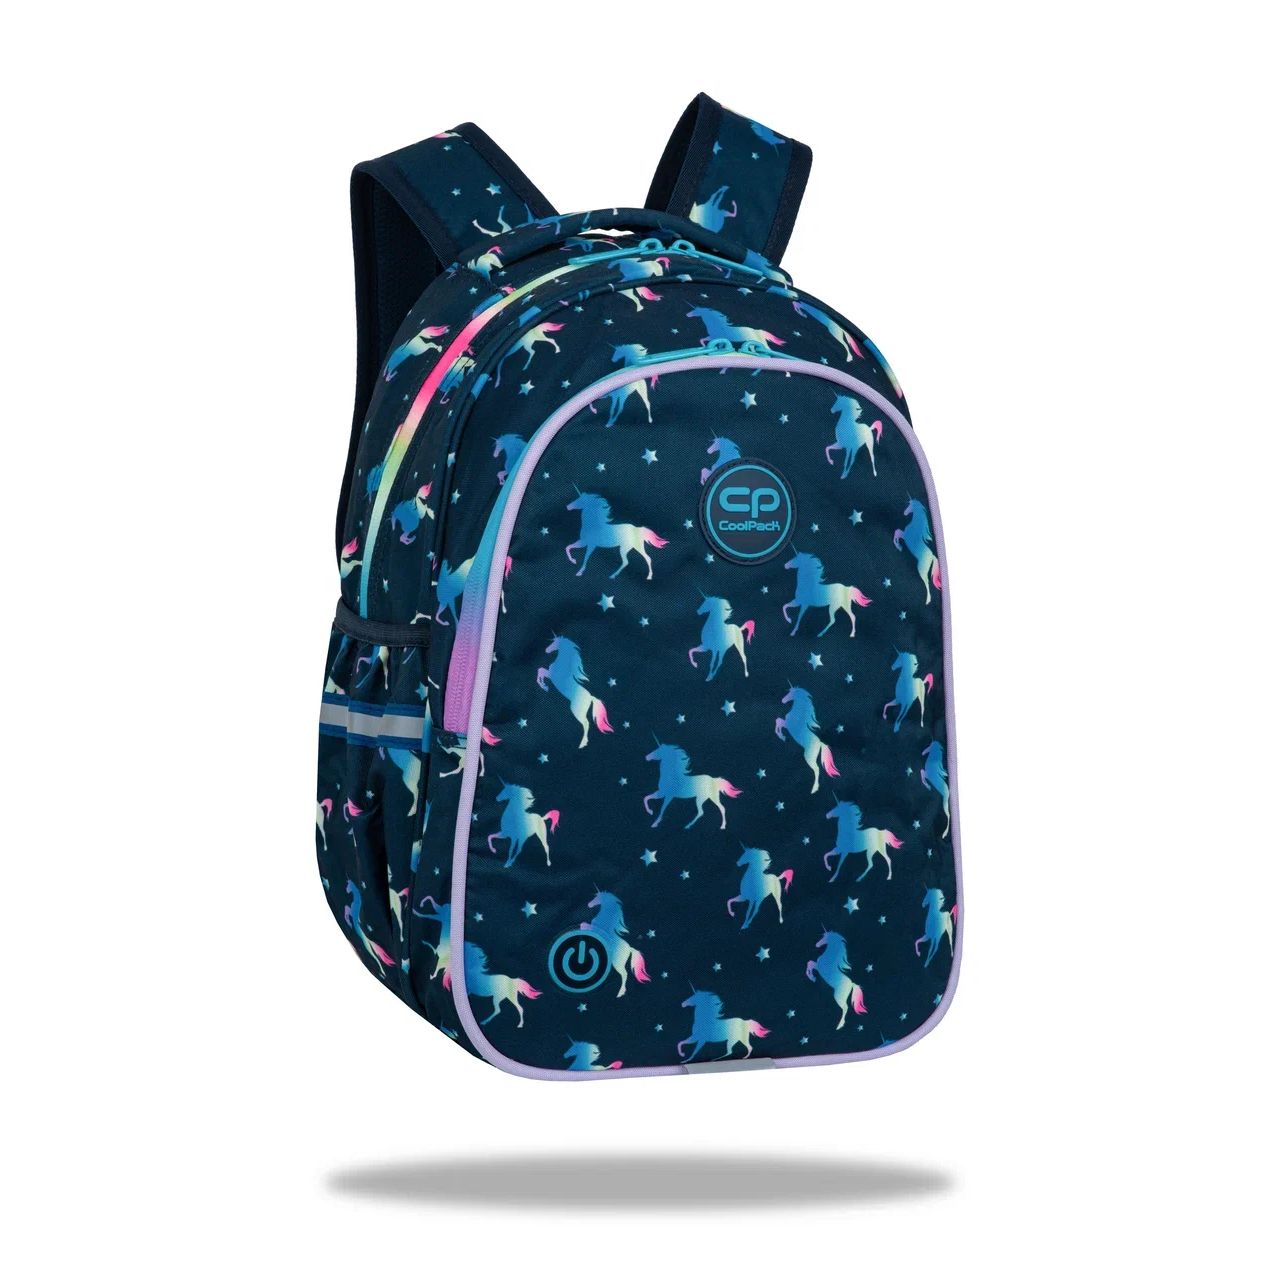 Рюкзак школьный Сool Pack LED, 39х28х17 см, 2 отделения, светодиодная подсветка рюкзак школьный сool pack led 39х28х17 см 2 отделения светодиодная подсветка